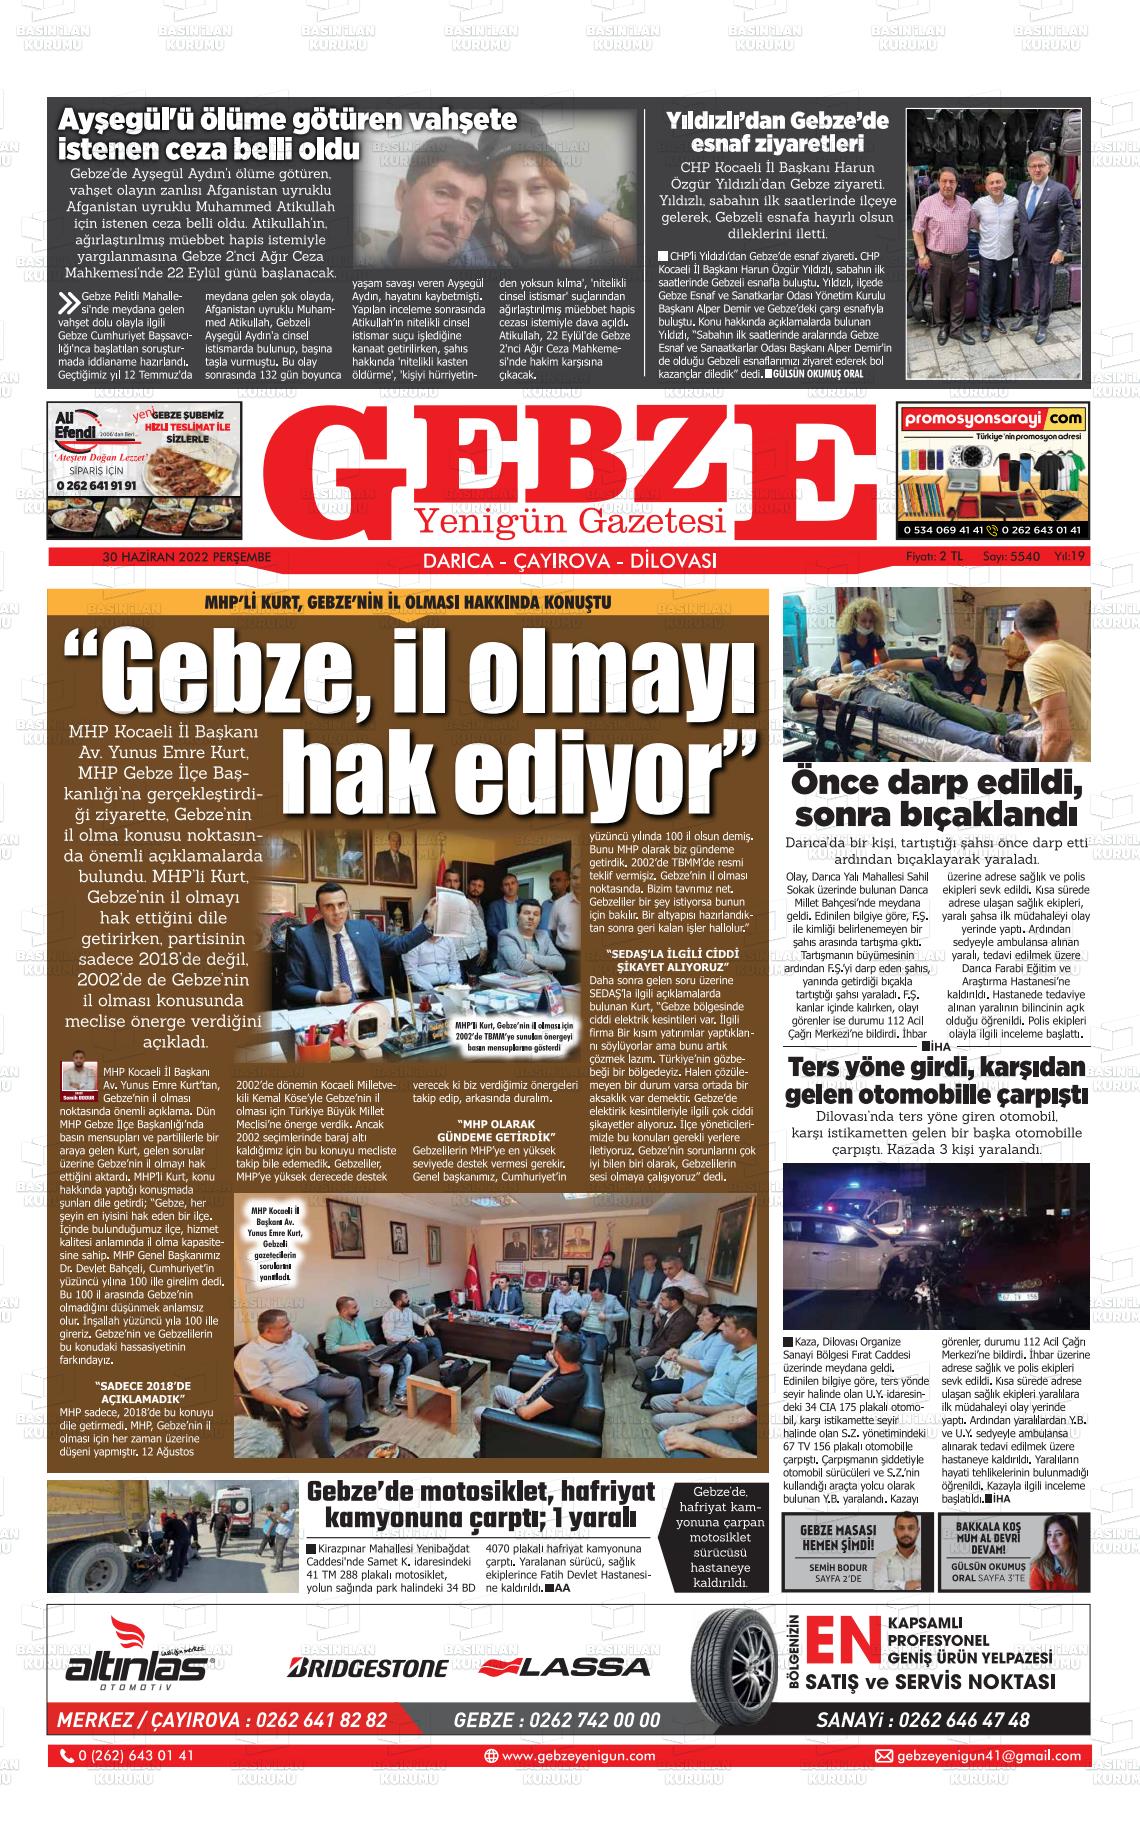 30 Haziran 2022 Gebze Yenigün Gazete Manşeti